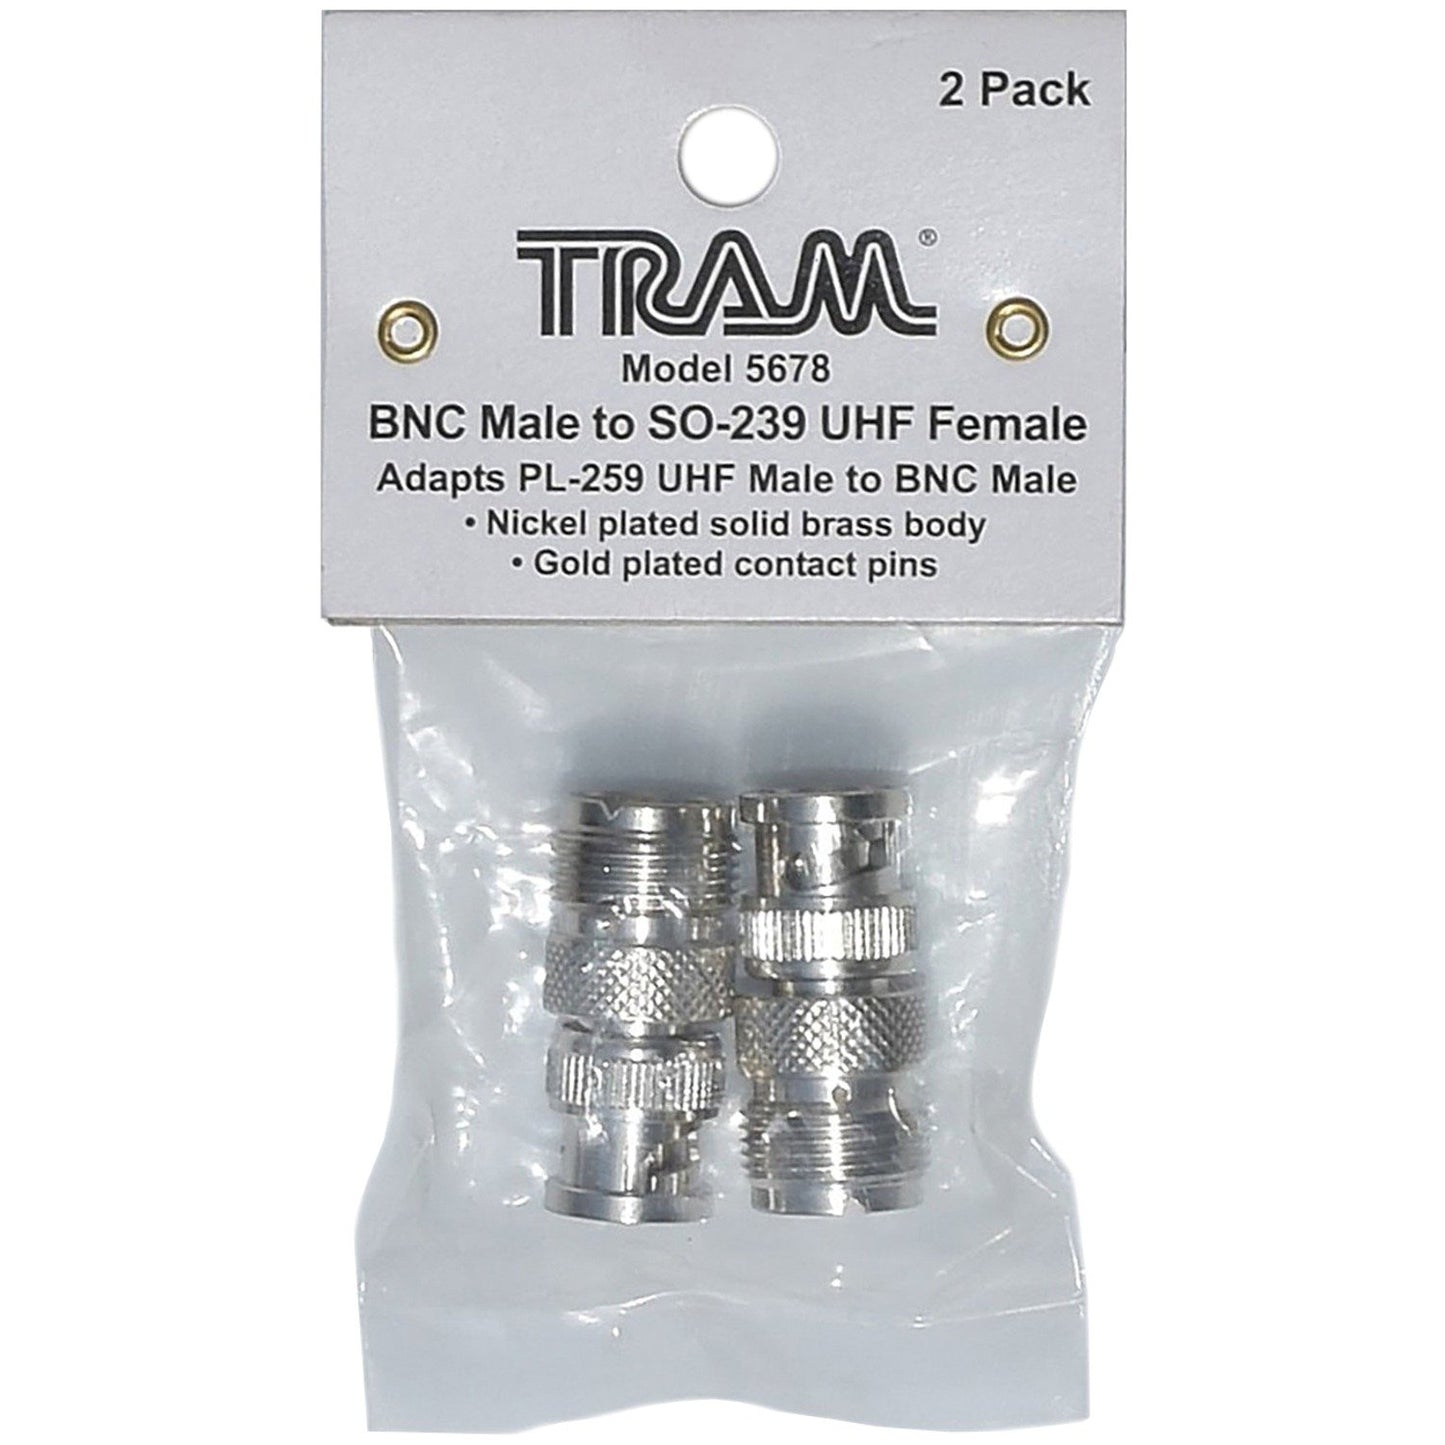 Tram 5678 BNC Male to SO-239 UHF Female Adapter, 2-Pack